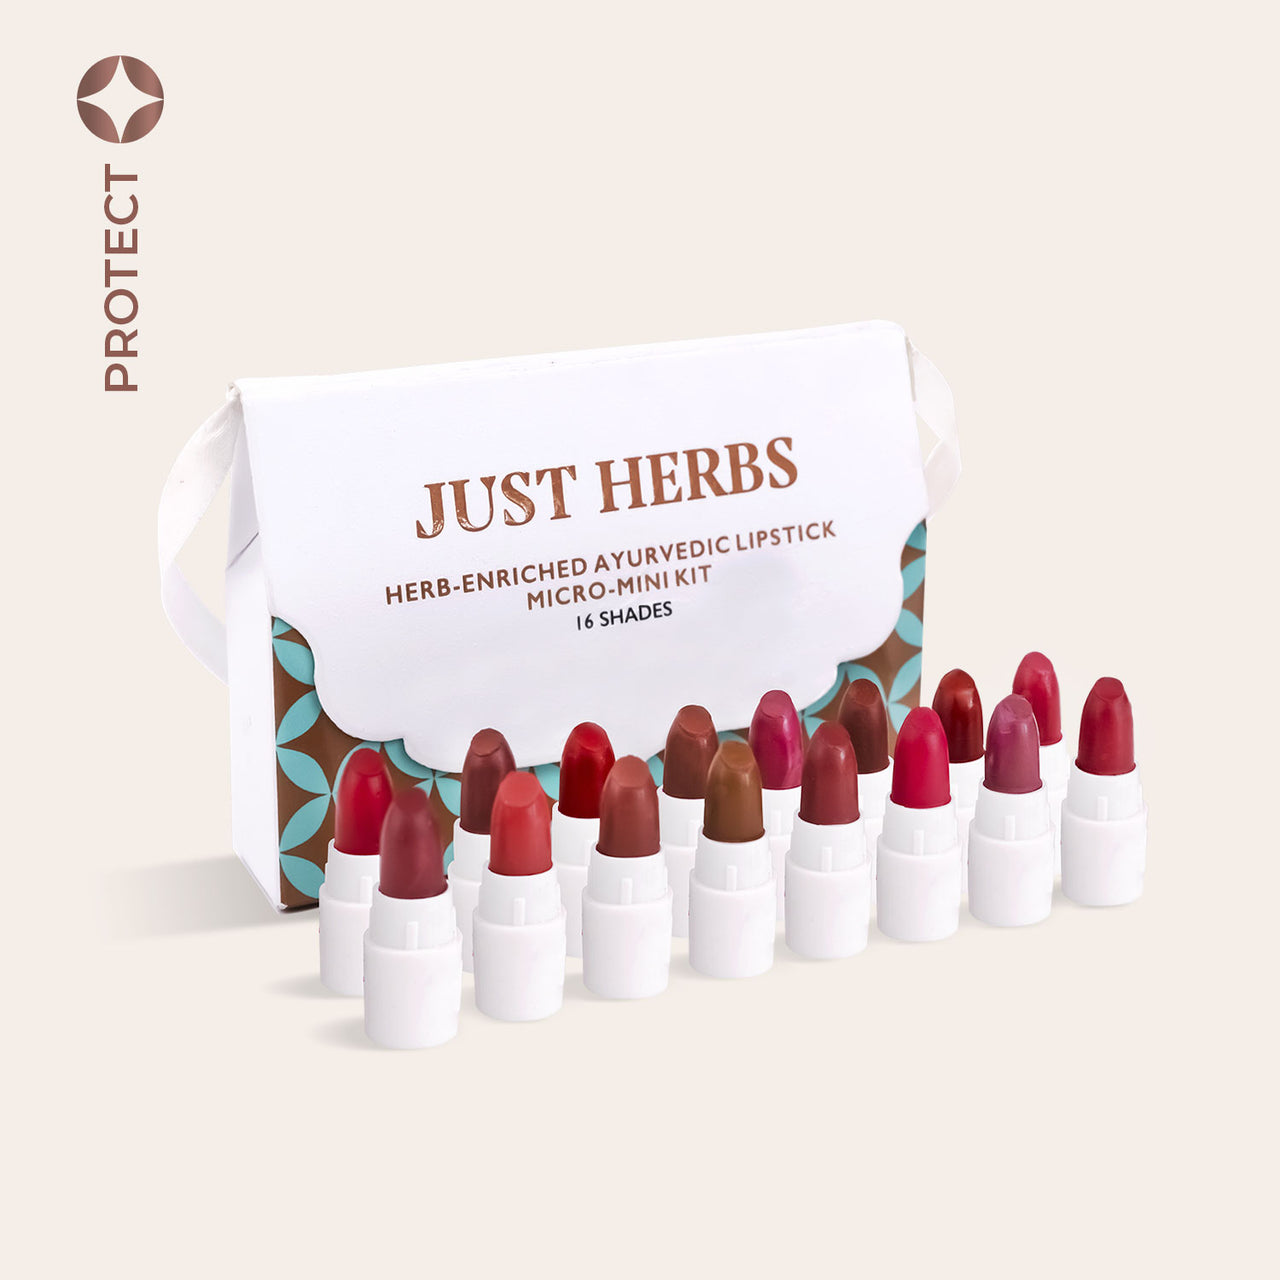 Herb Enriched Ayurvedic Lipstick Micro-Mini Kit